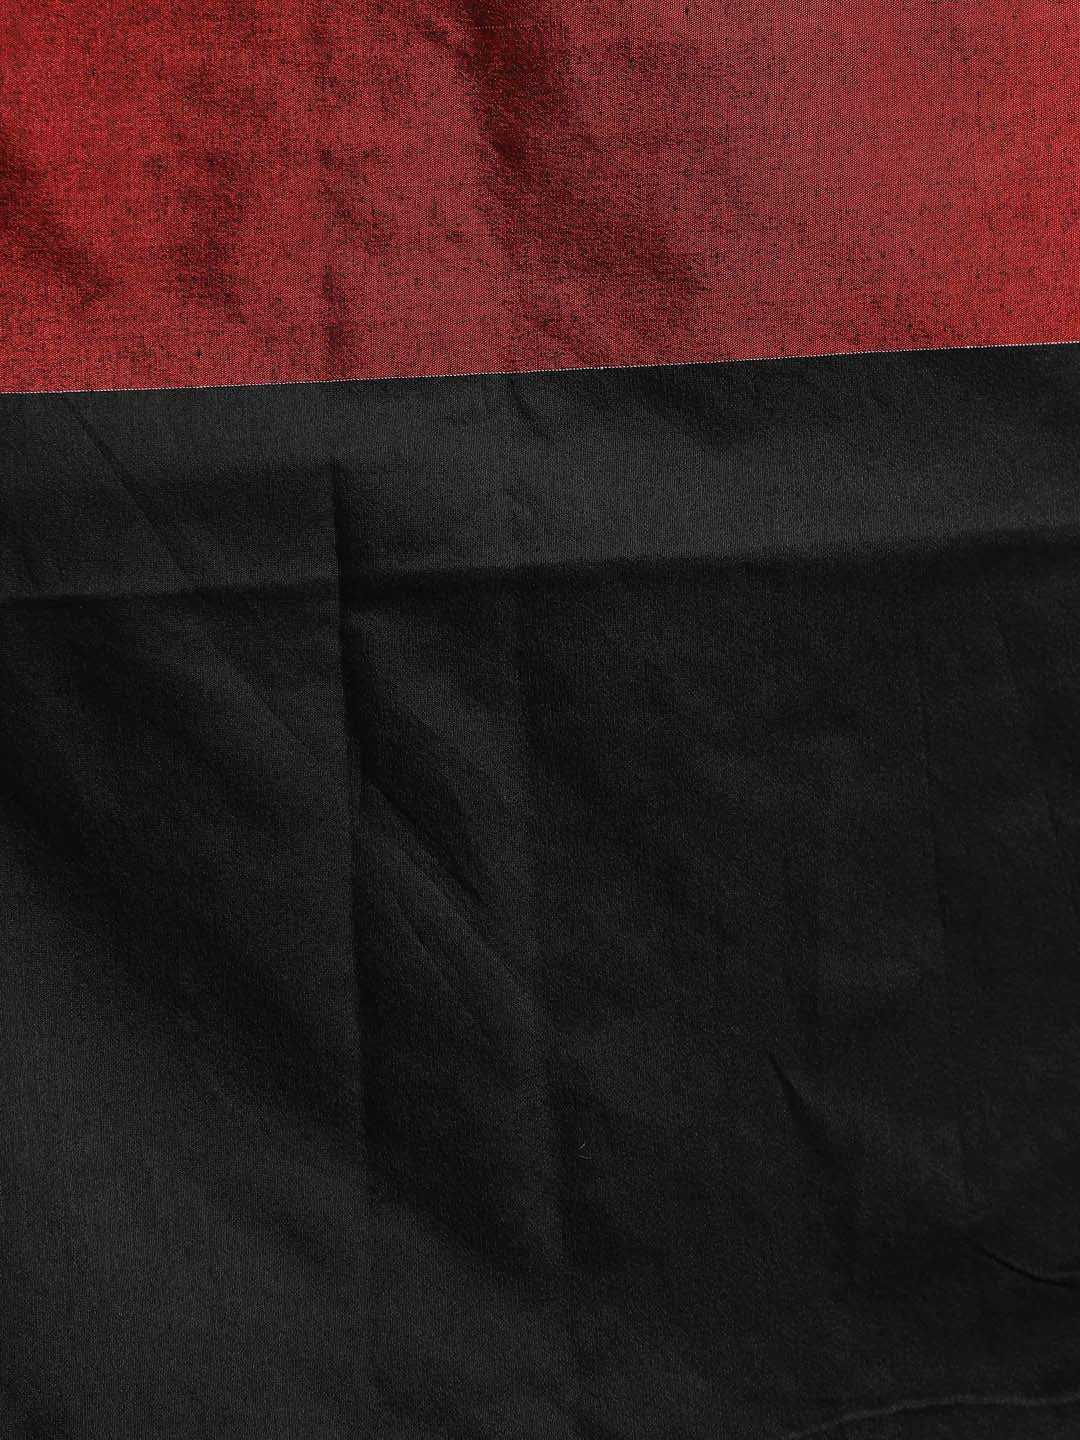 Indethnic Black and Khaki Solid Colour Blocked Saree - Saree Detail View